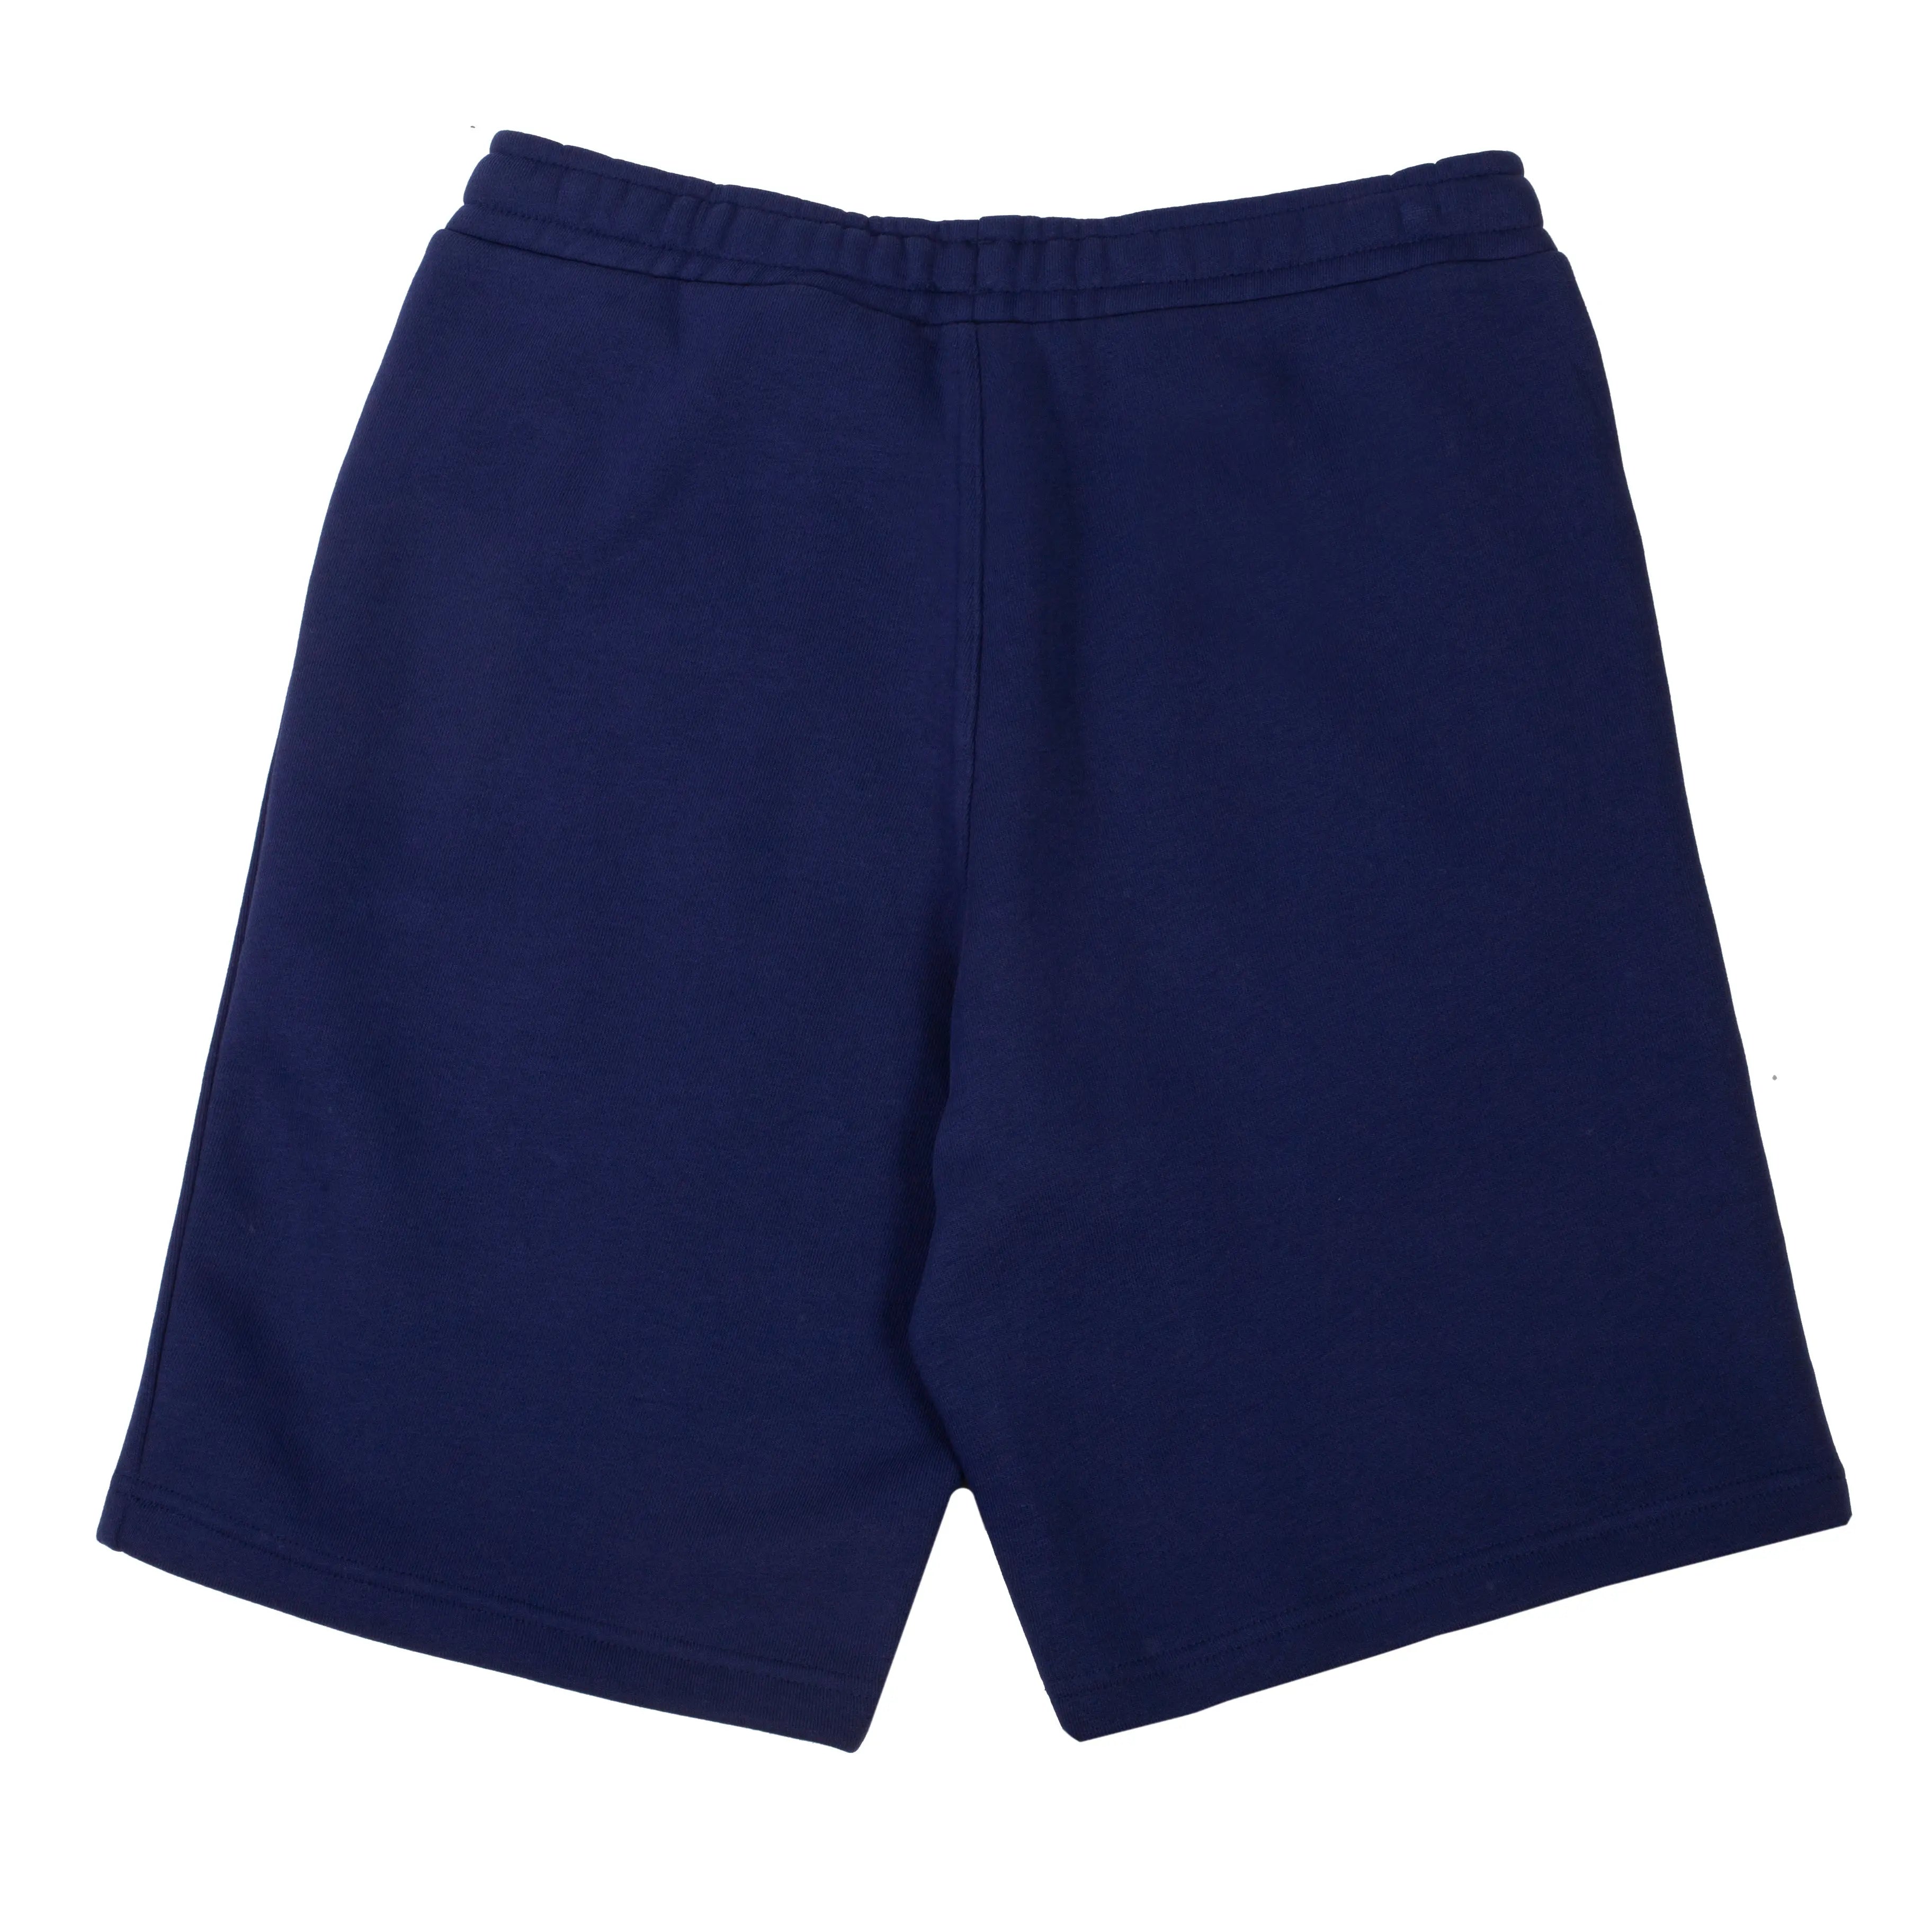 Adidas Essentials Poolside Navy Shorts